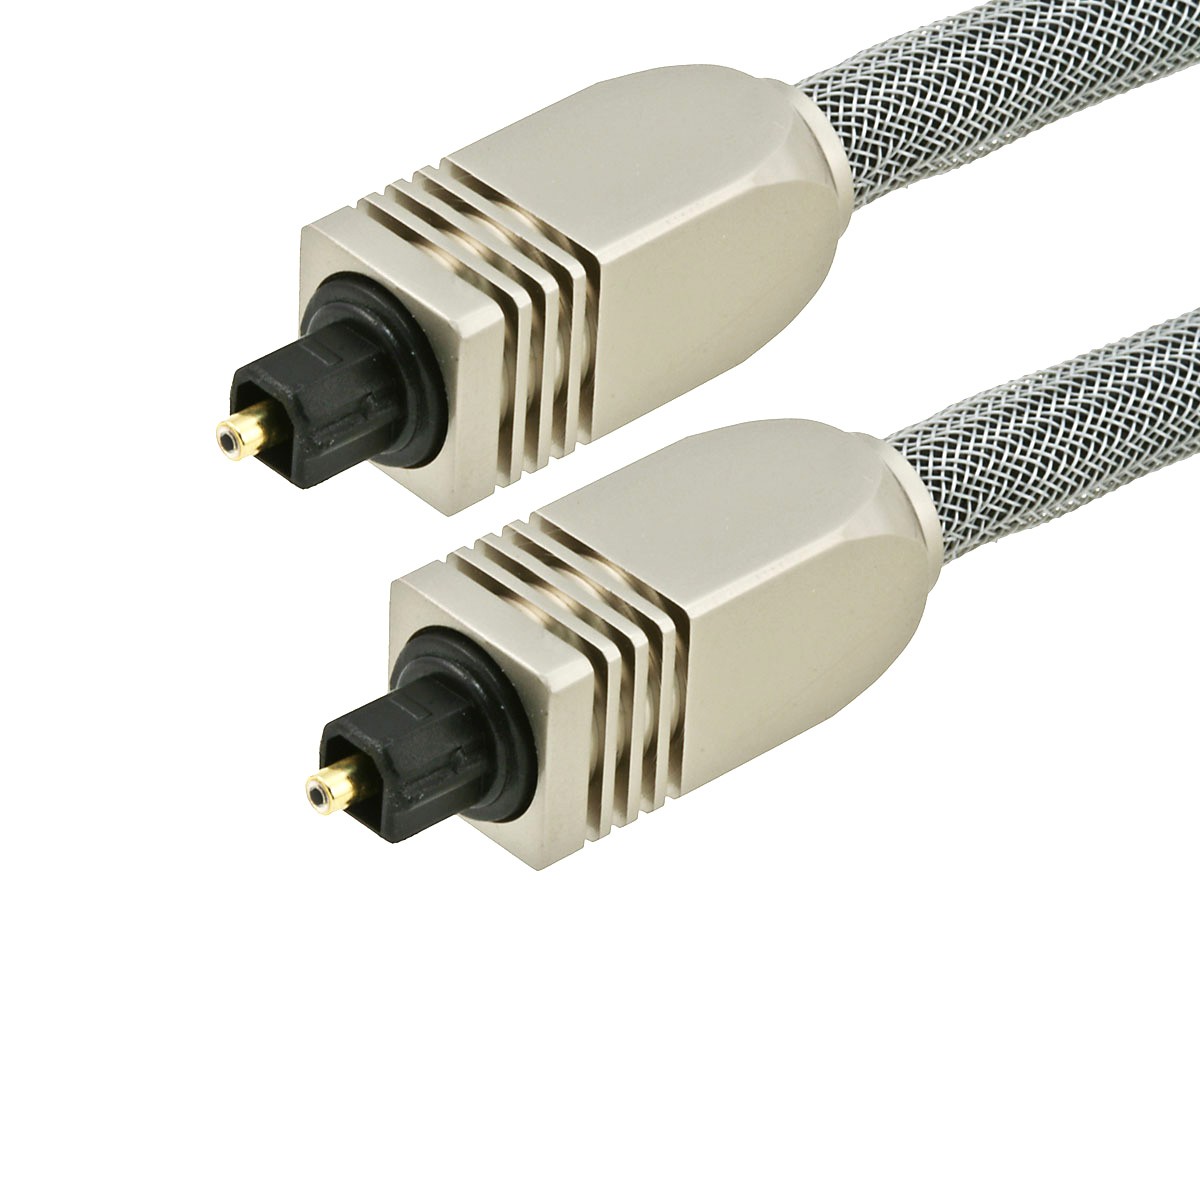 Toslink SPDIF optical fiber 1.8m metal connectors and sheathing